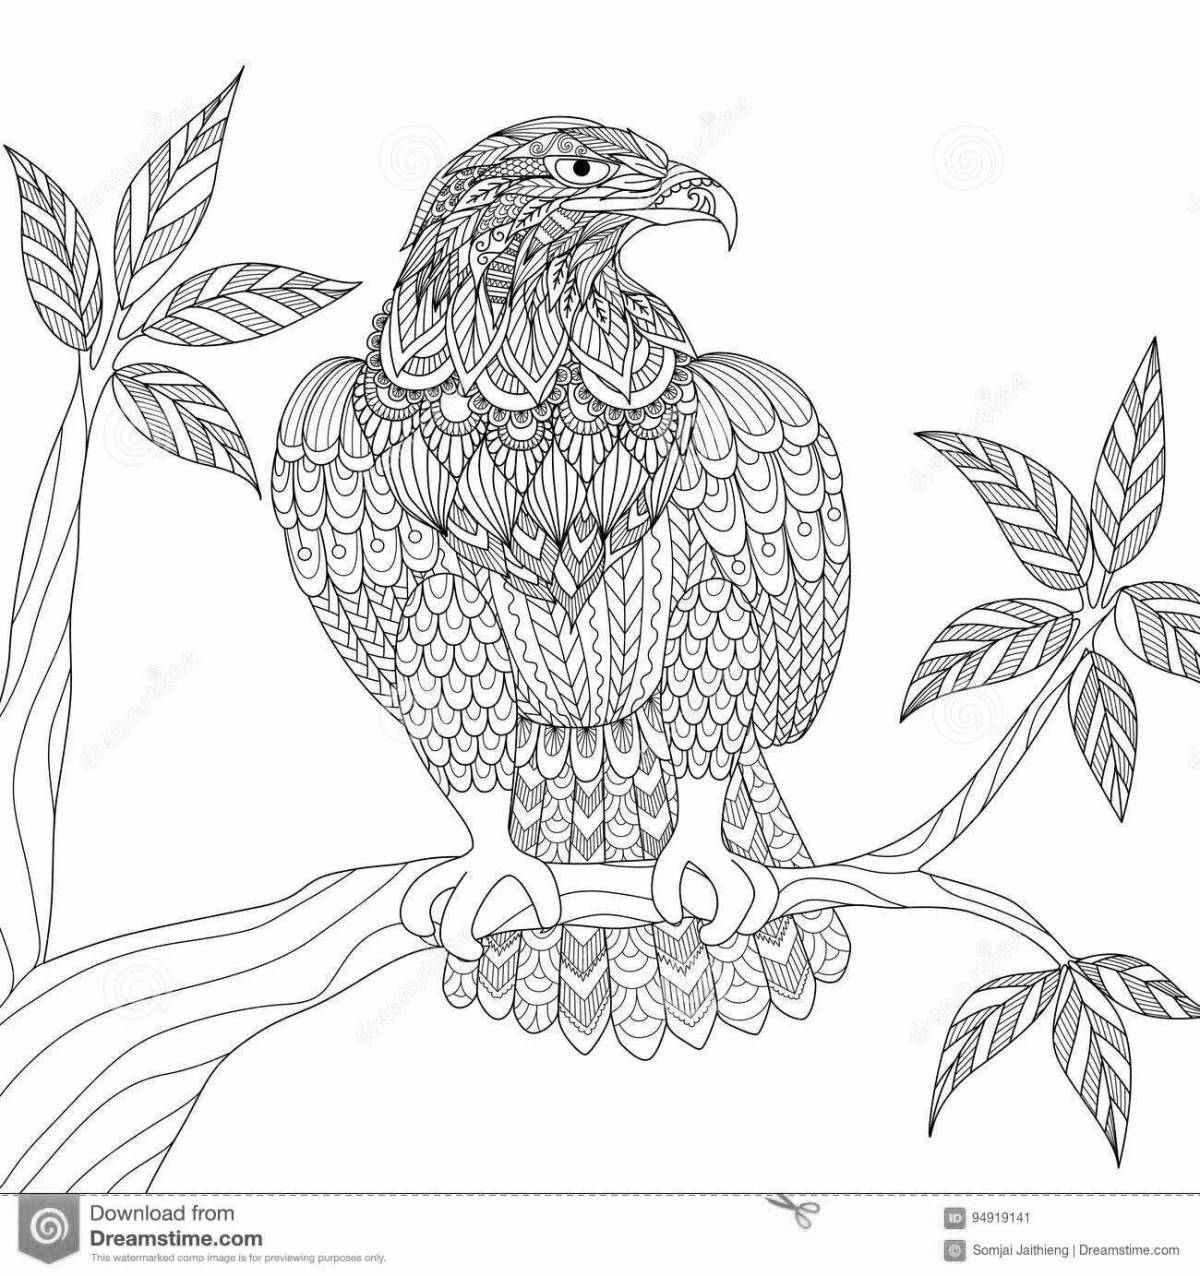 Gorgeous anti-stress eagle coloring book